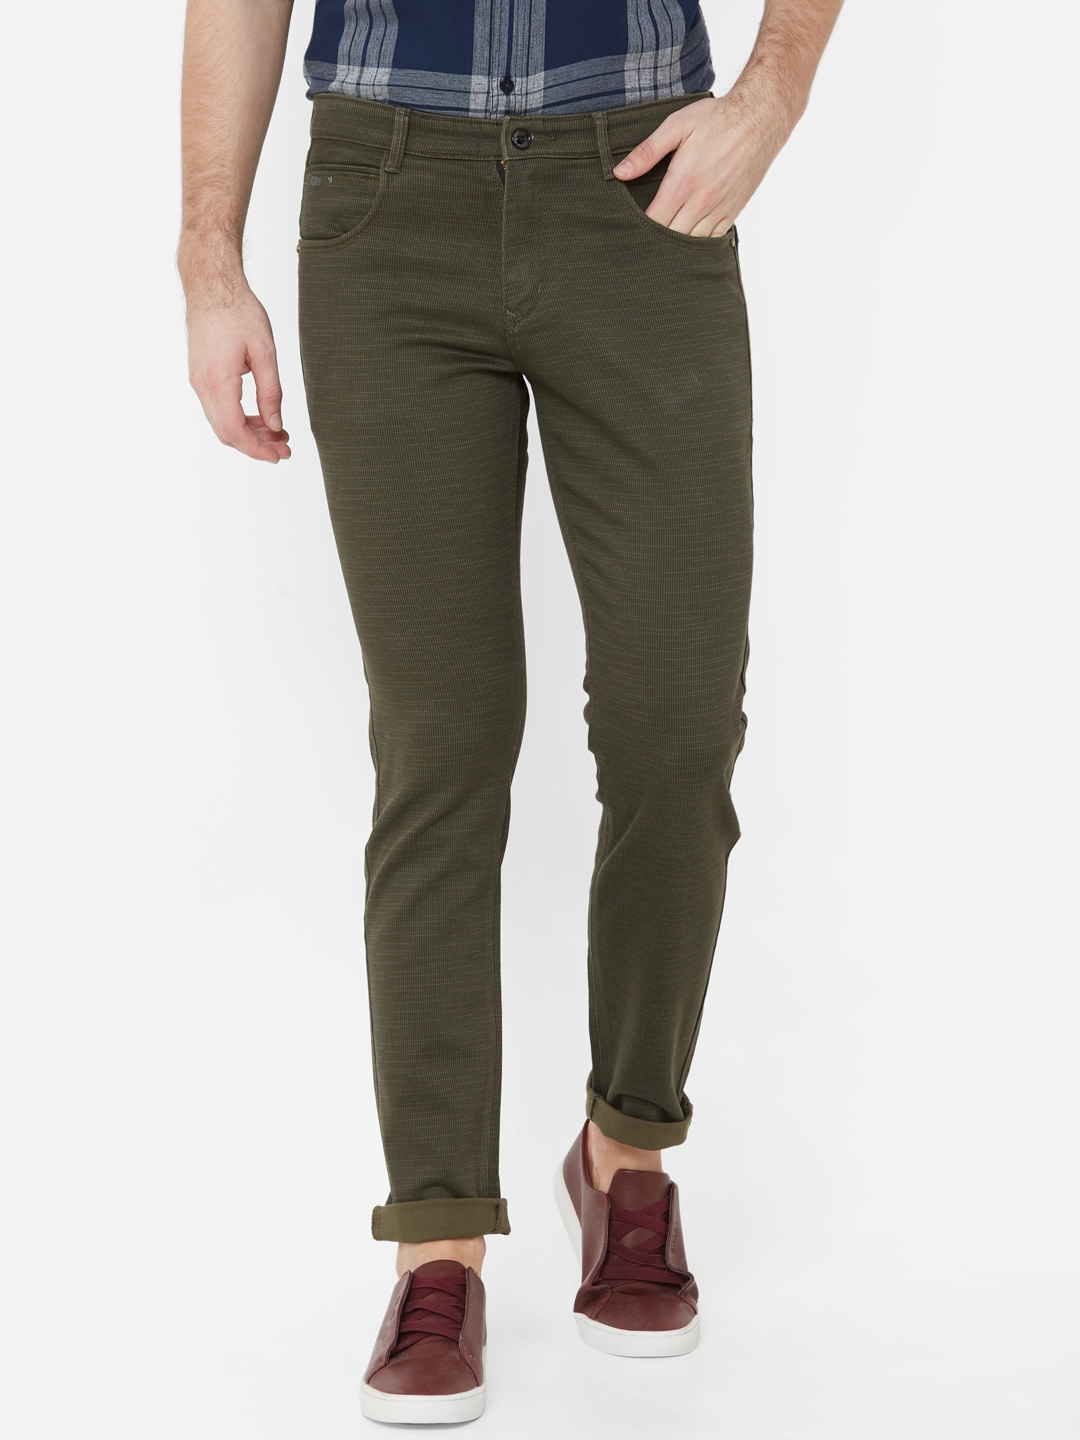 Livewire | Livewire Men's Cotton Lycra Olive Green Slim Fit Solid Trouser